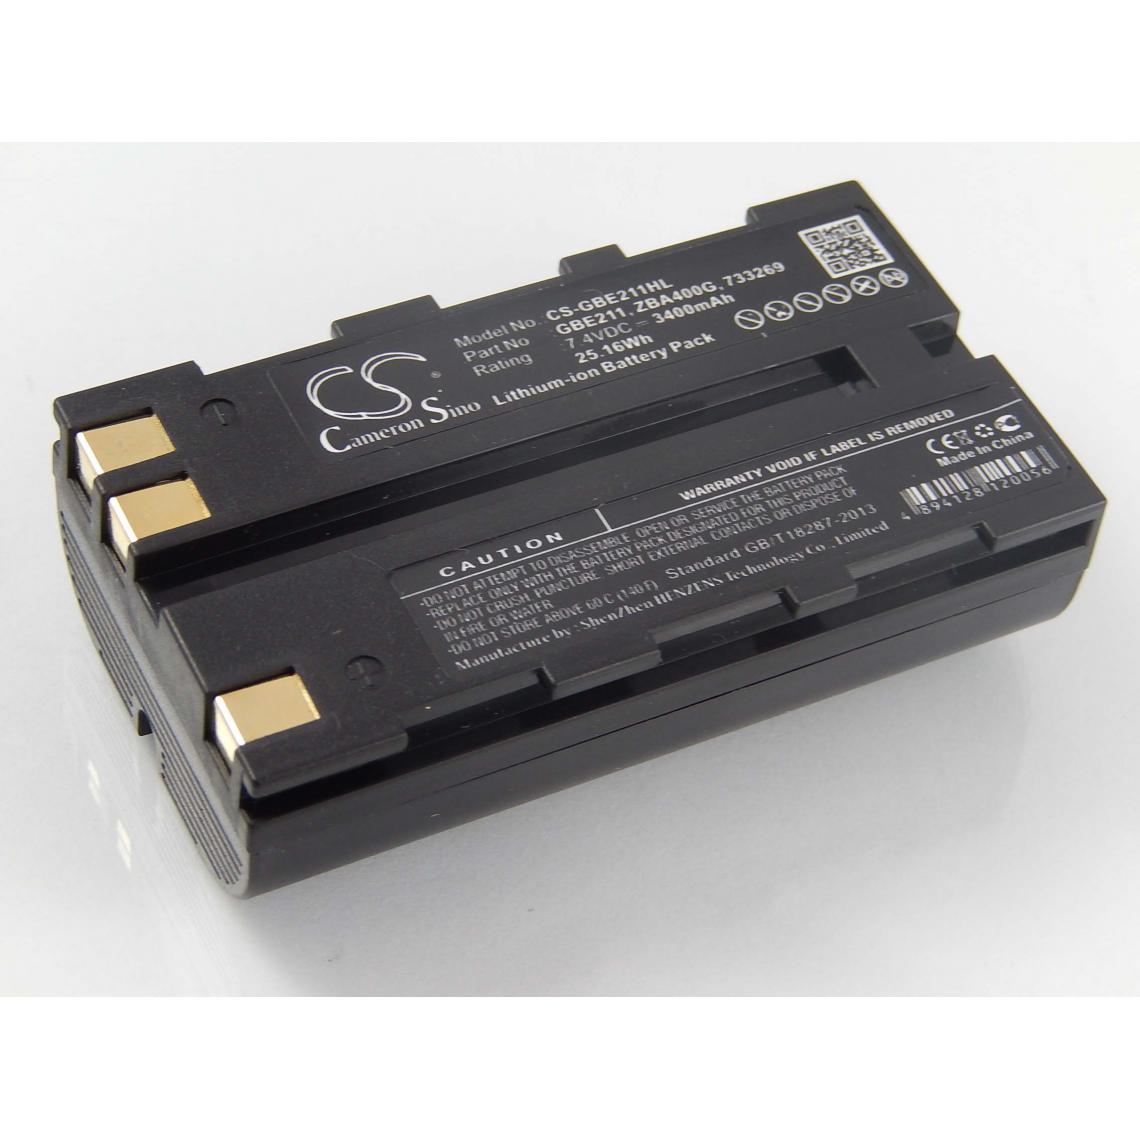 Vhbw - vhbw Batterie compatible avec Leica TC402, TC403, TC405, TC406 dispositif de mesure laser, outil de mesure (3400mAh, 7,4V, Li-ion) - Piles rechargeables